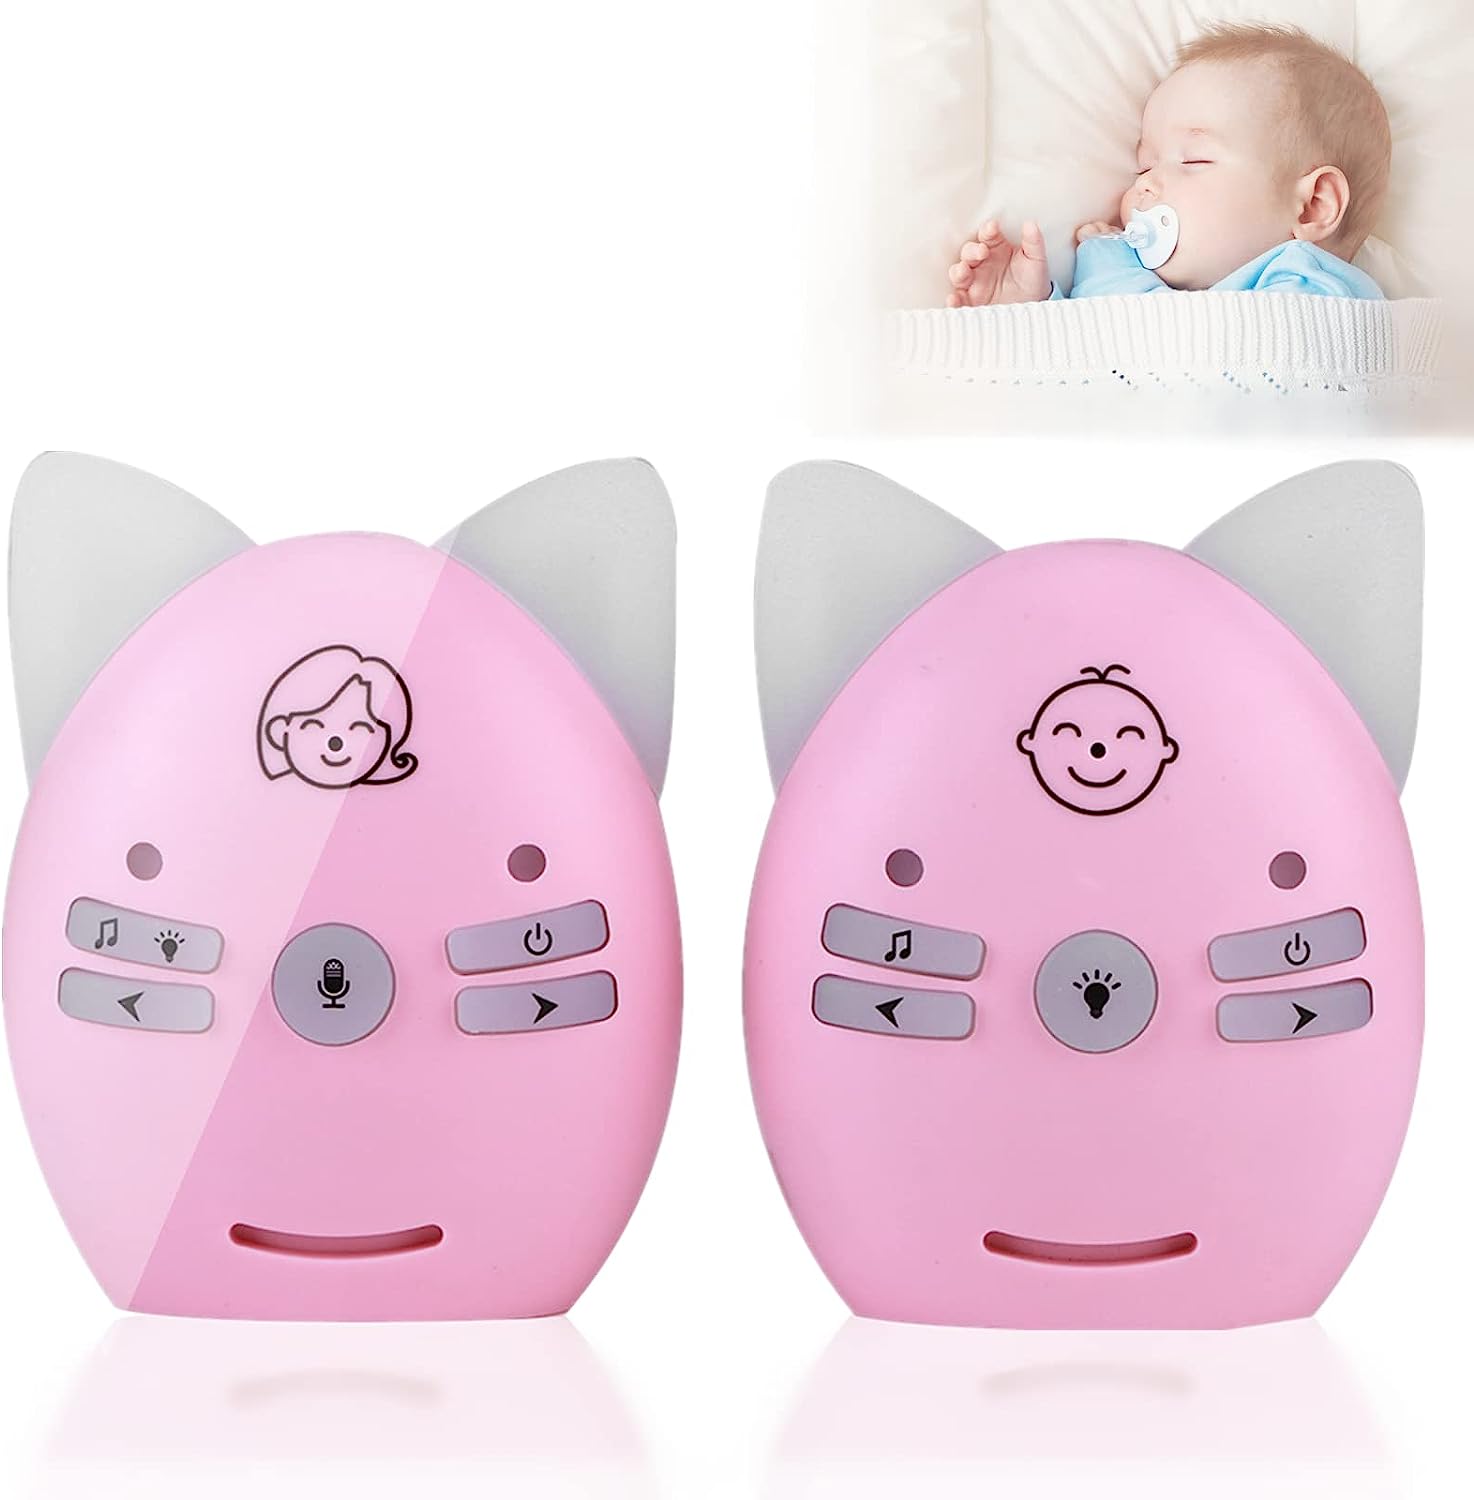 2.4GHz Audio Baby Monitor, Wireless Digital Baby [...]